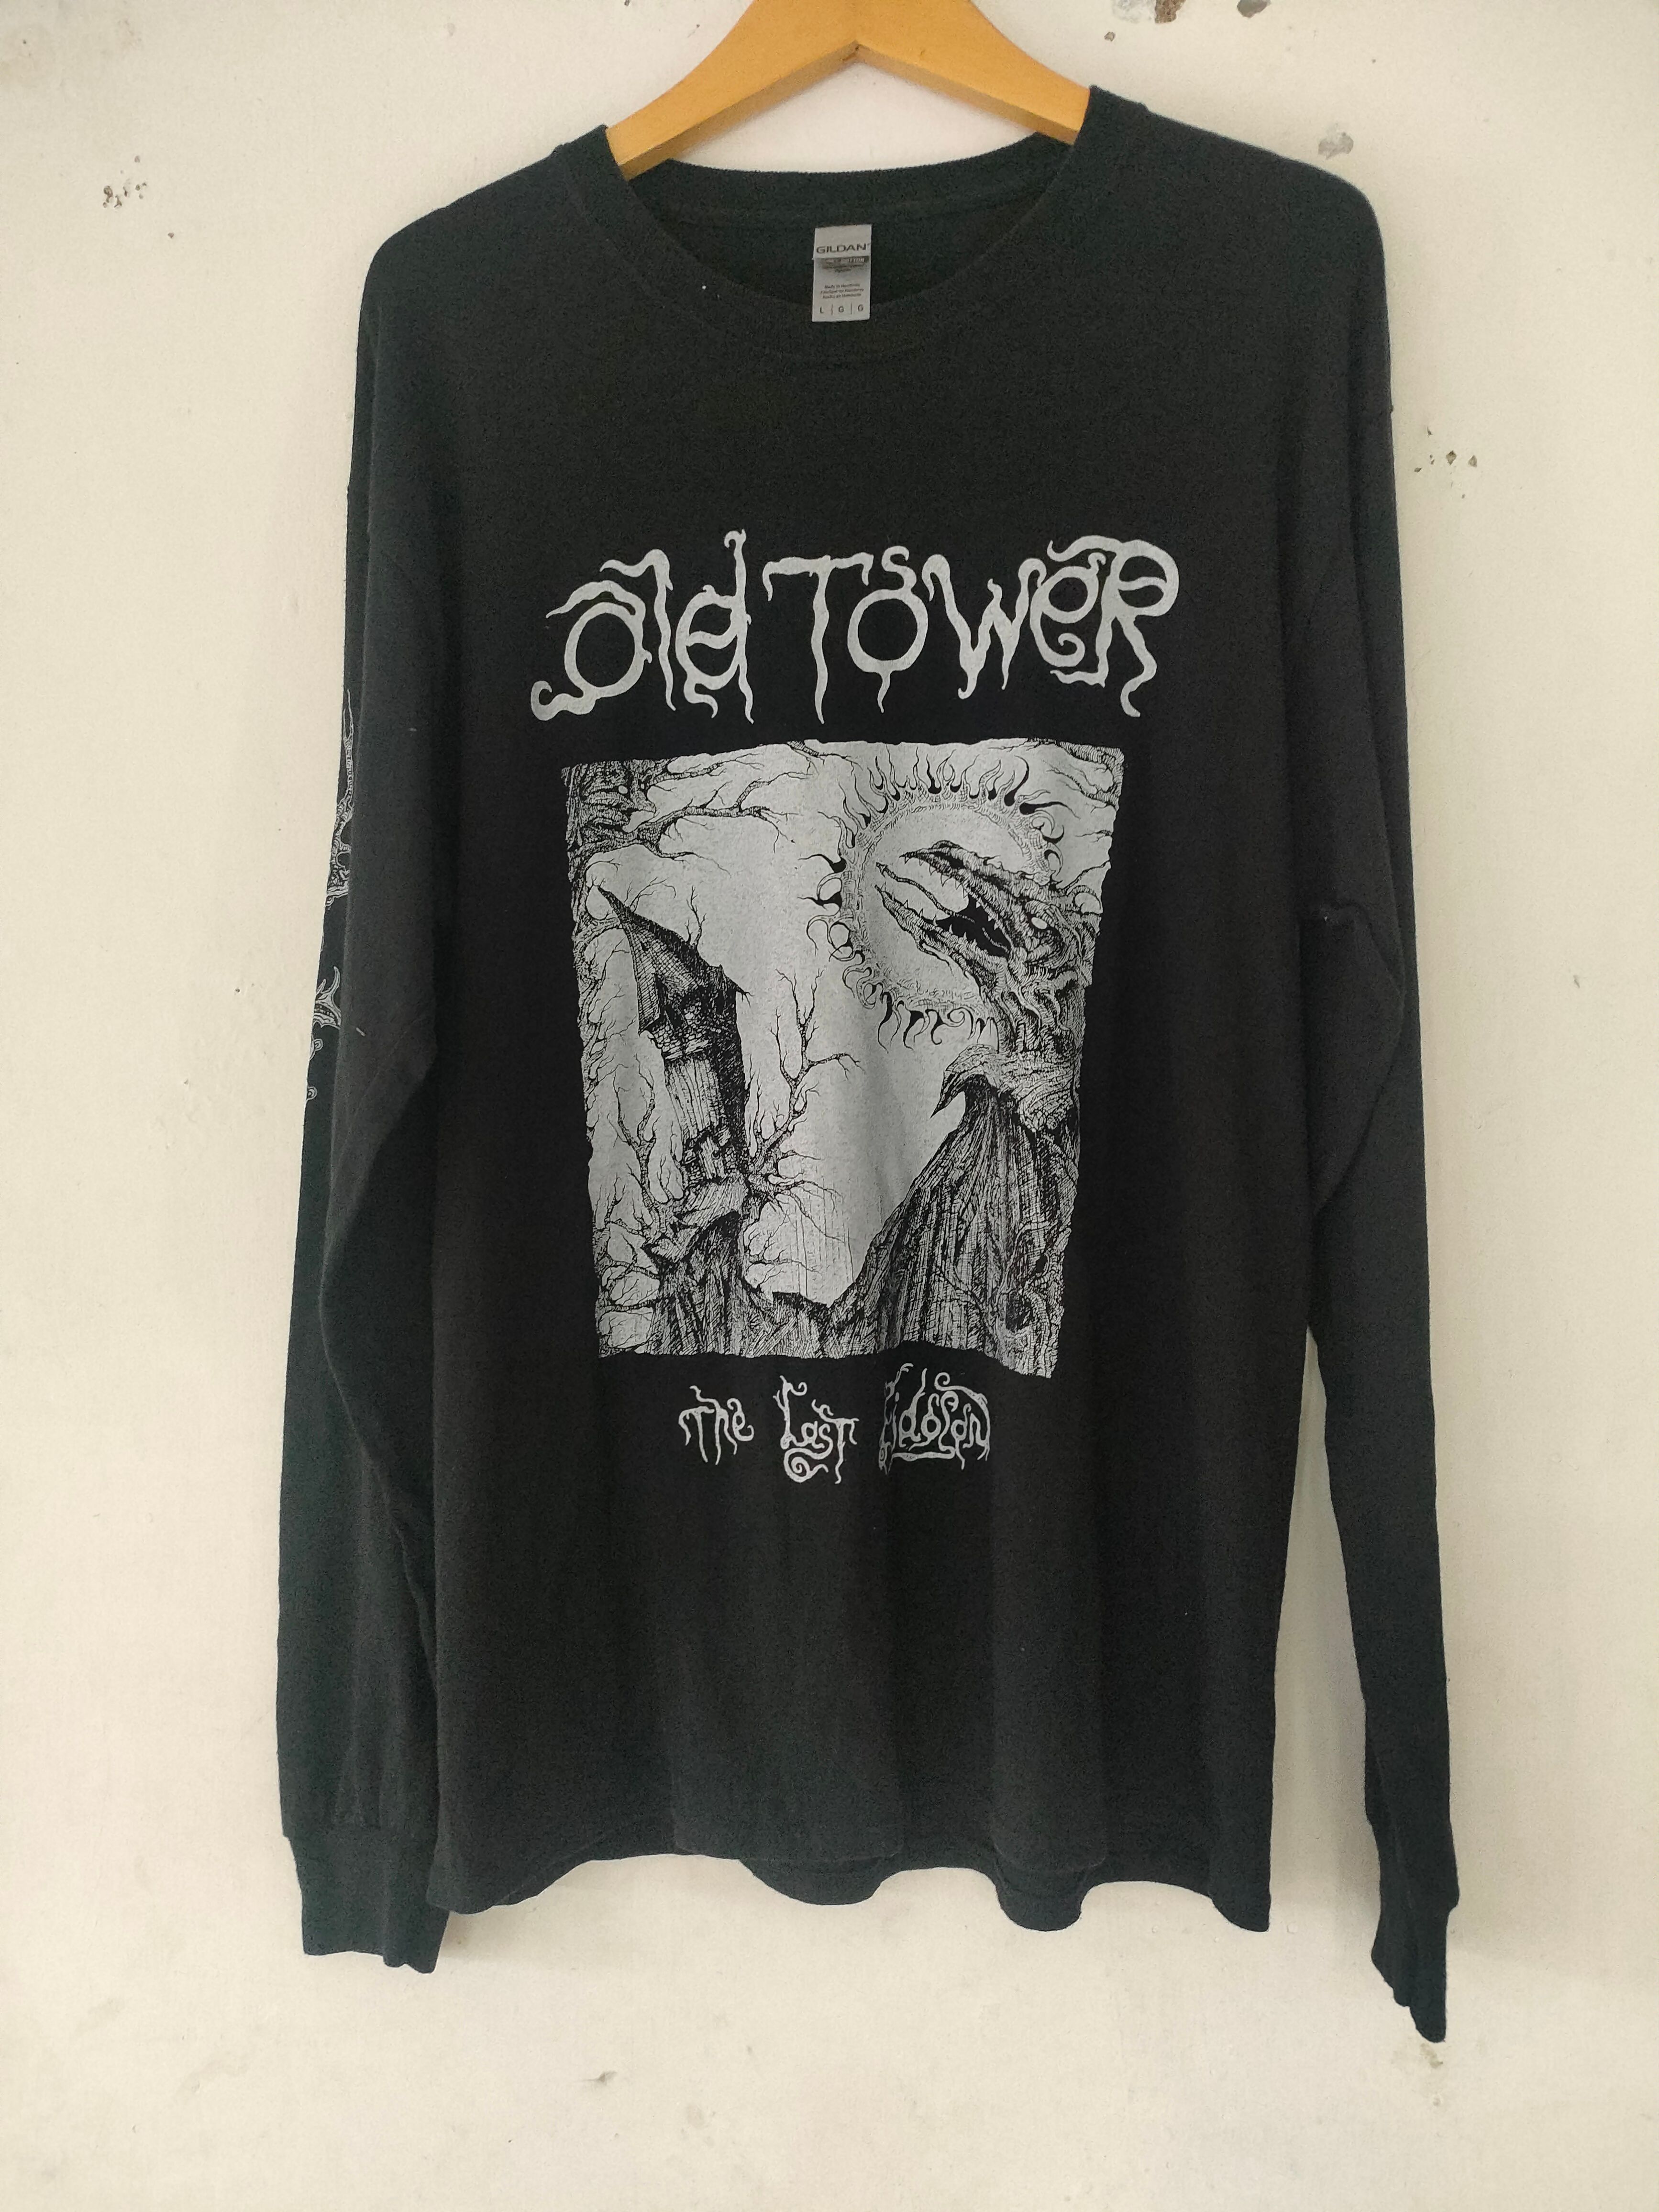 Good Music Merchandise - OLD TOWER LONG SLEEVE TEES - 1